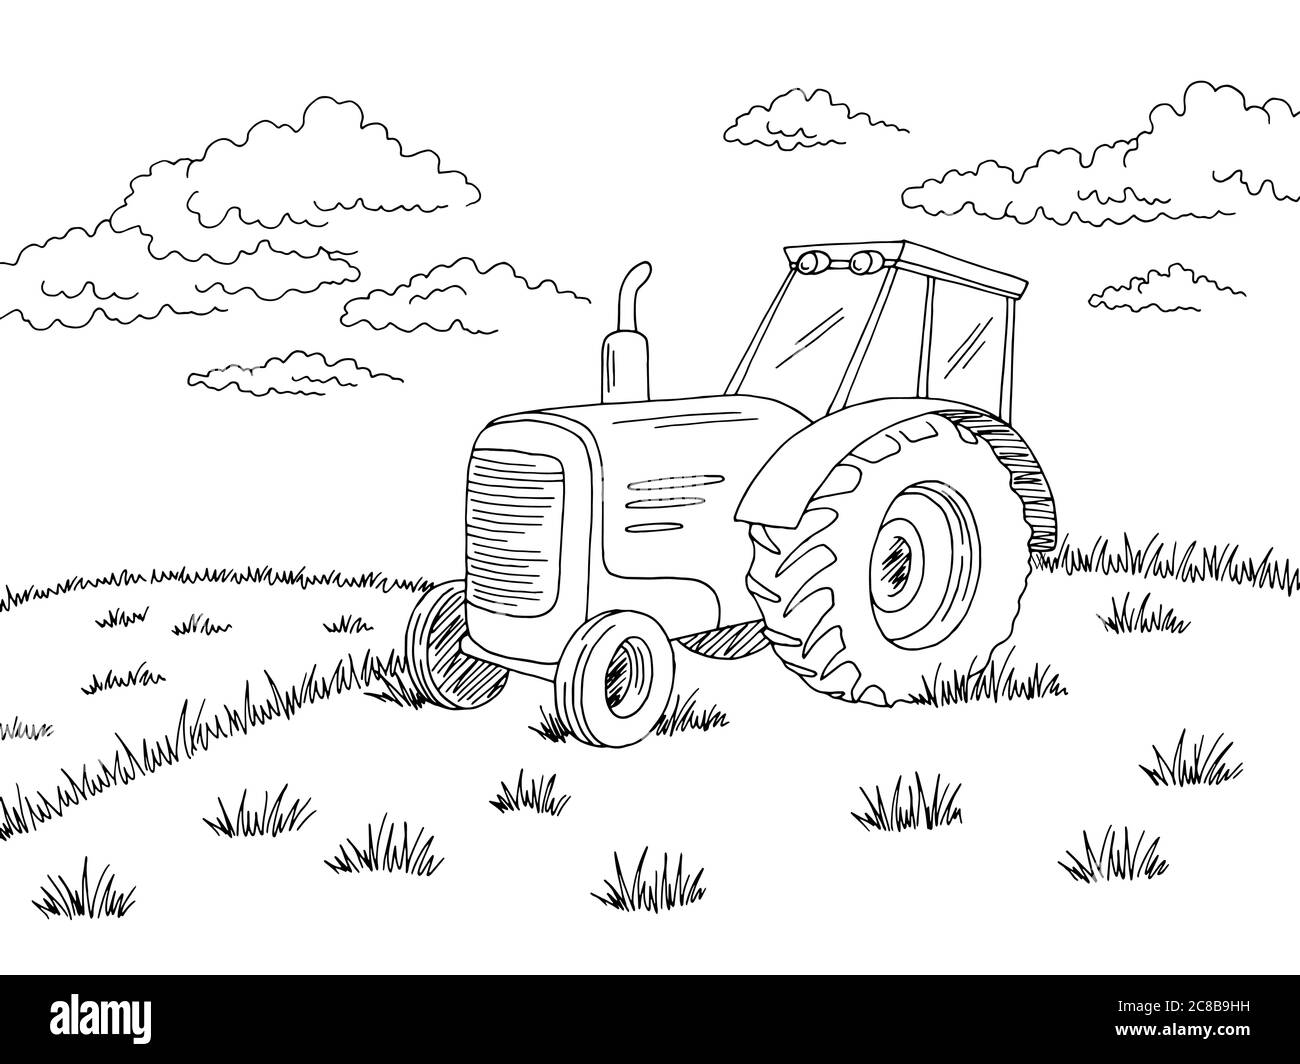 Traktor auf dem Feld Grafik schwarz weiß Landschaft Skizze Illustration Vektor Stock Vektor